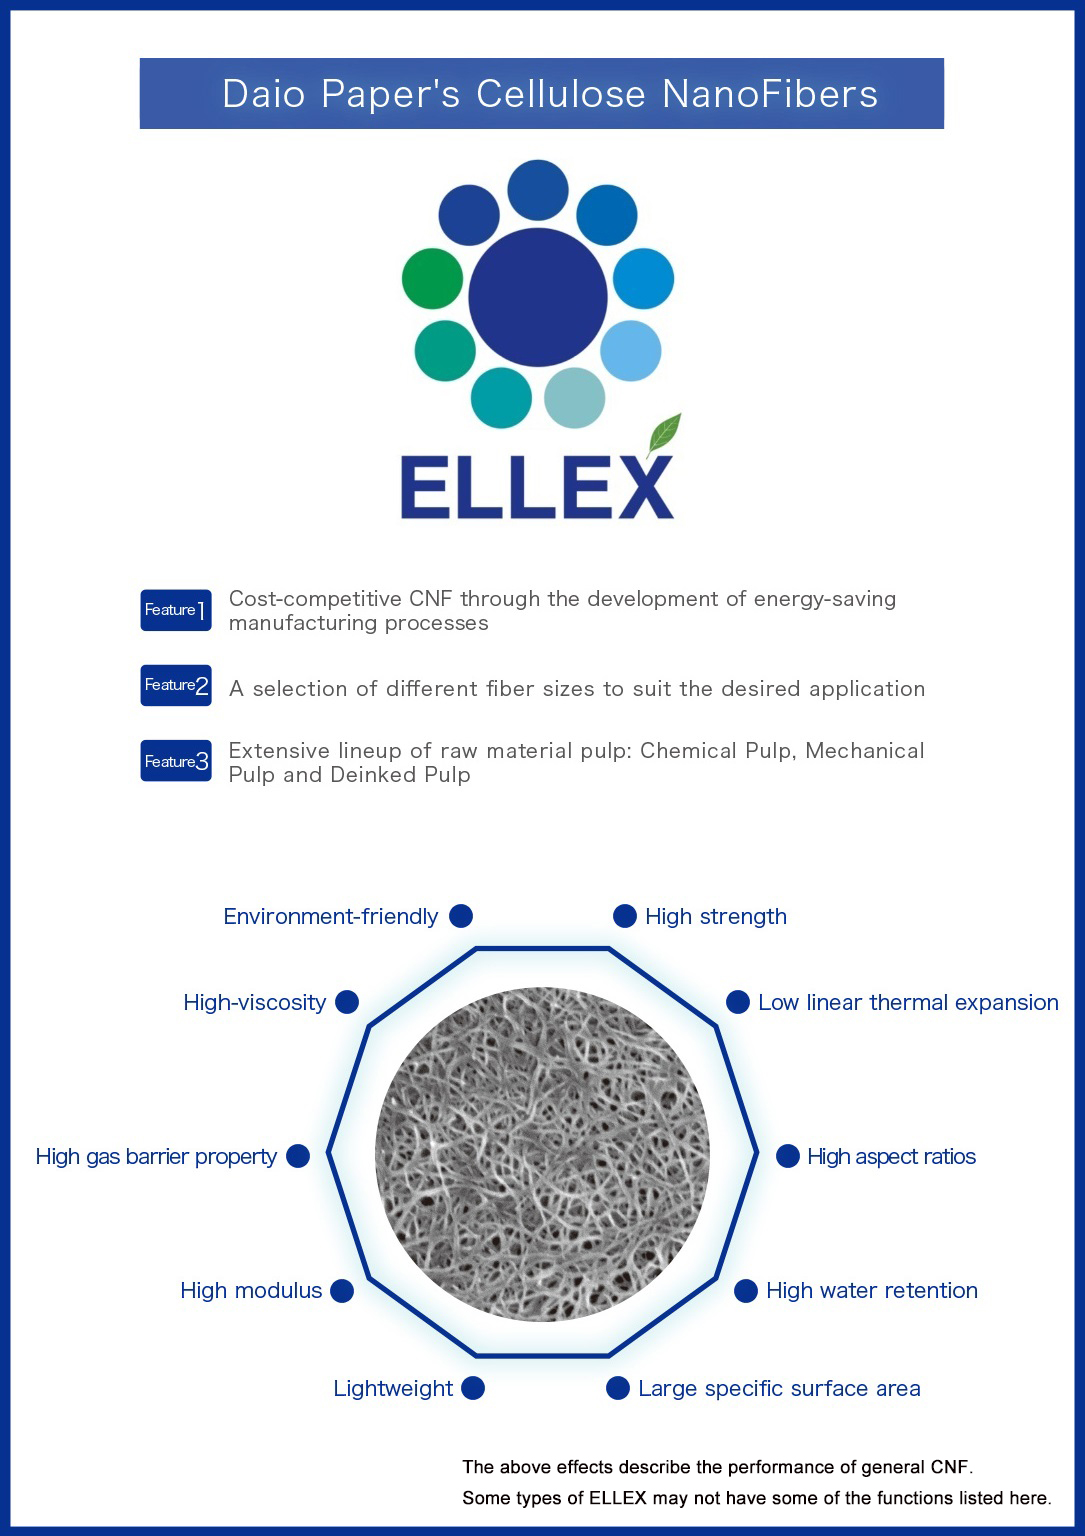 Cellulose nanofibers from Daio Paper Ellex